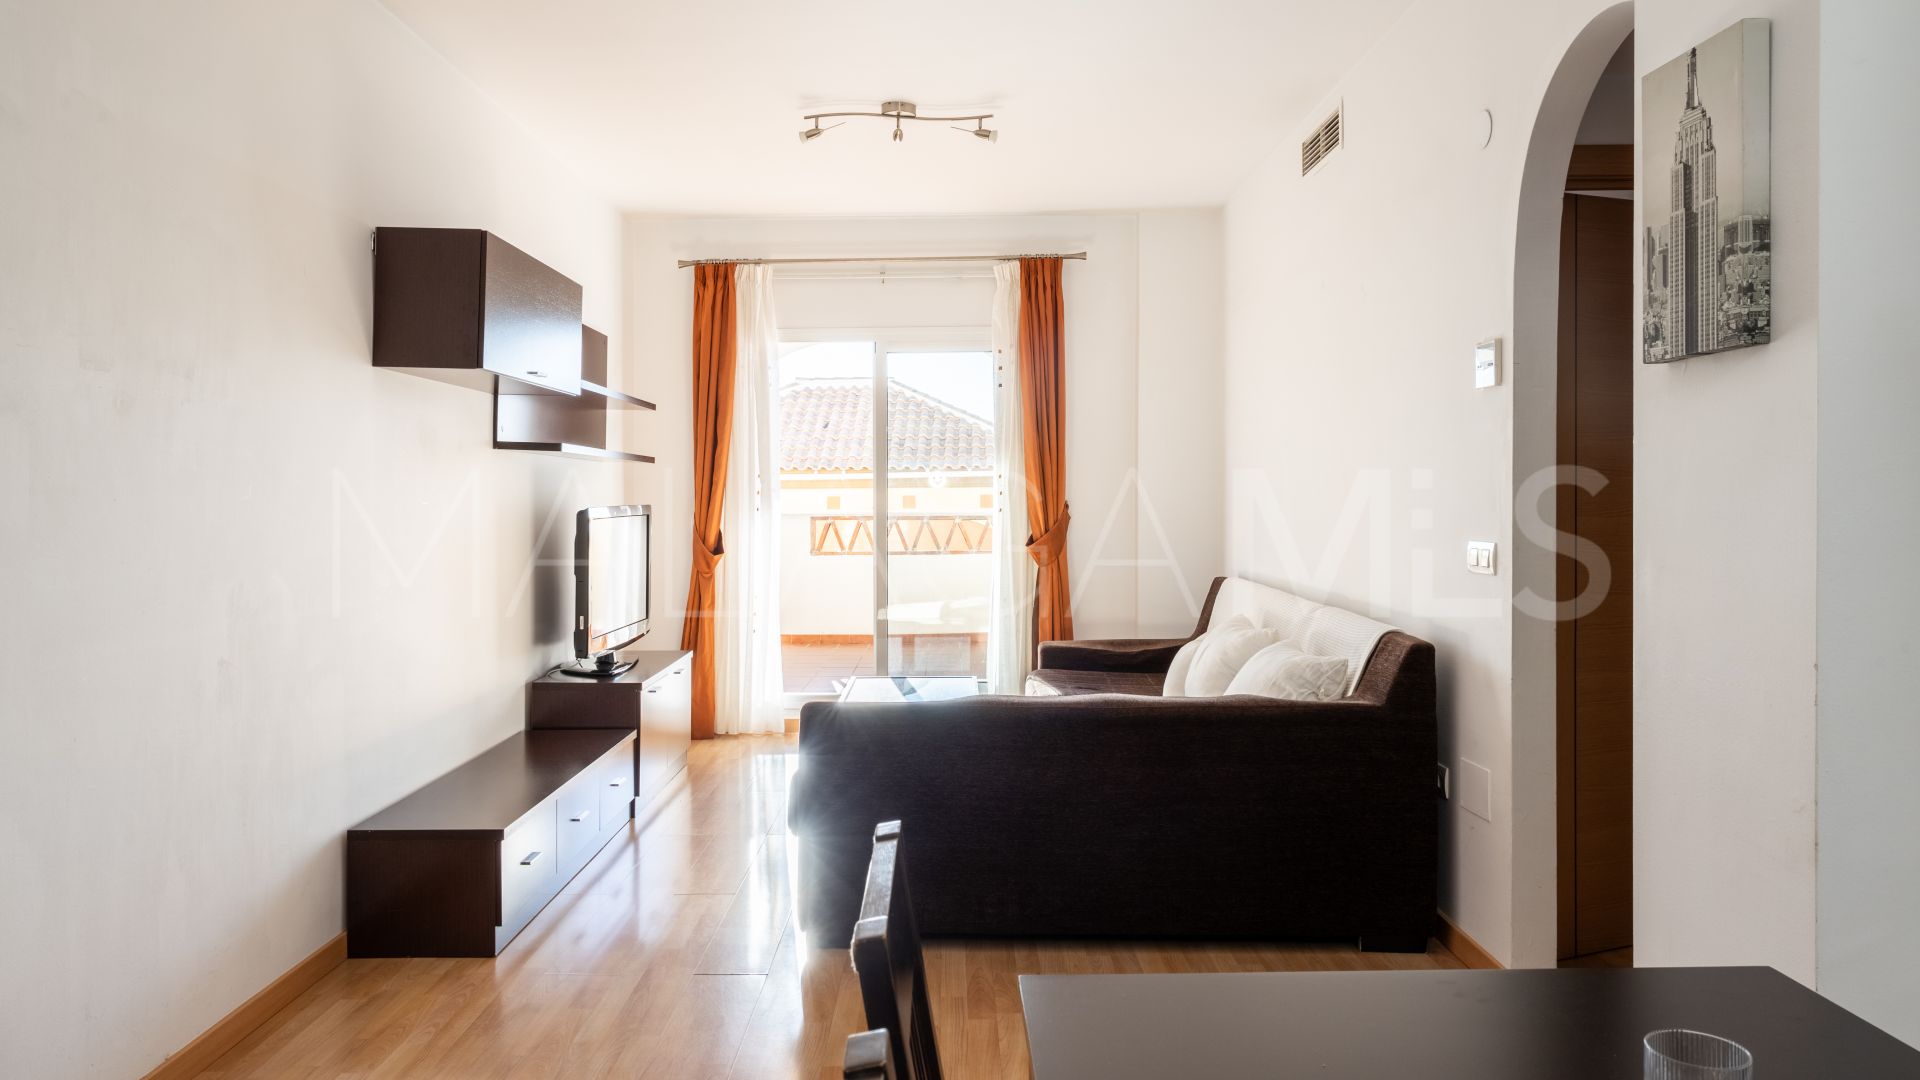 Apartment for sale in La Capellania with 2 bedrooms